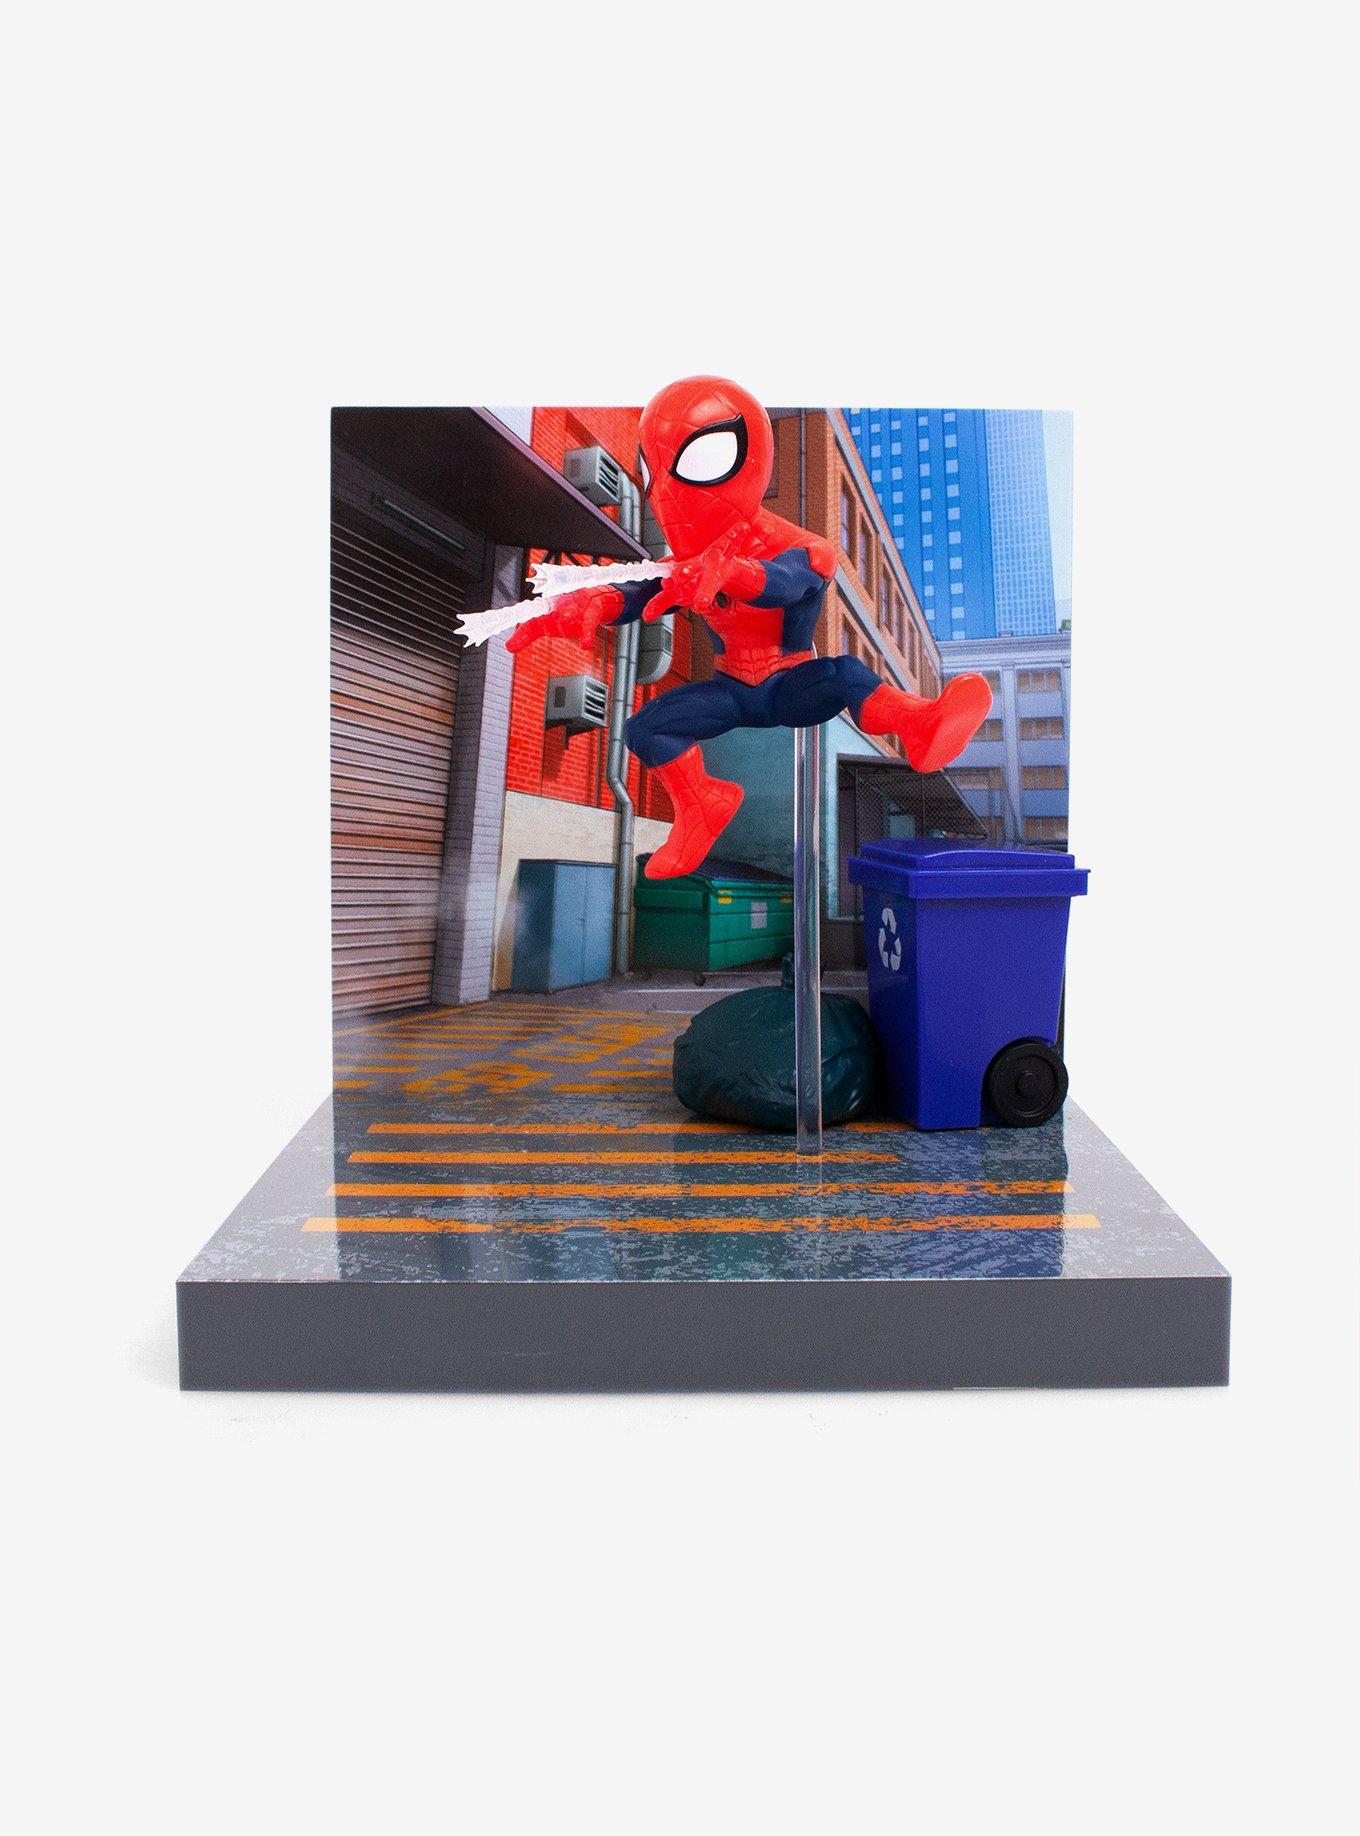 The Loyal Subjects Marvel Spider-Man Superama Figure, , alternate